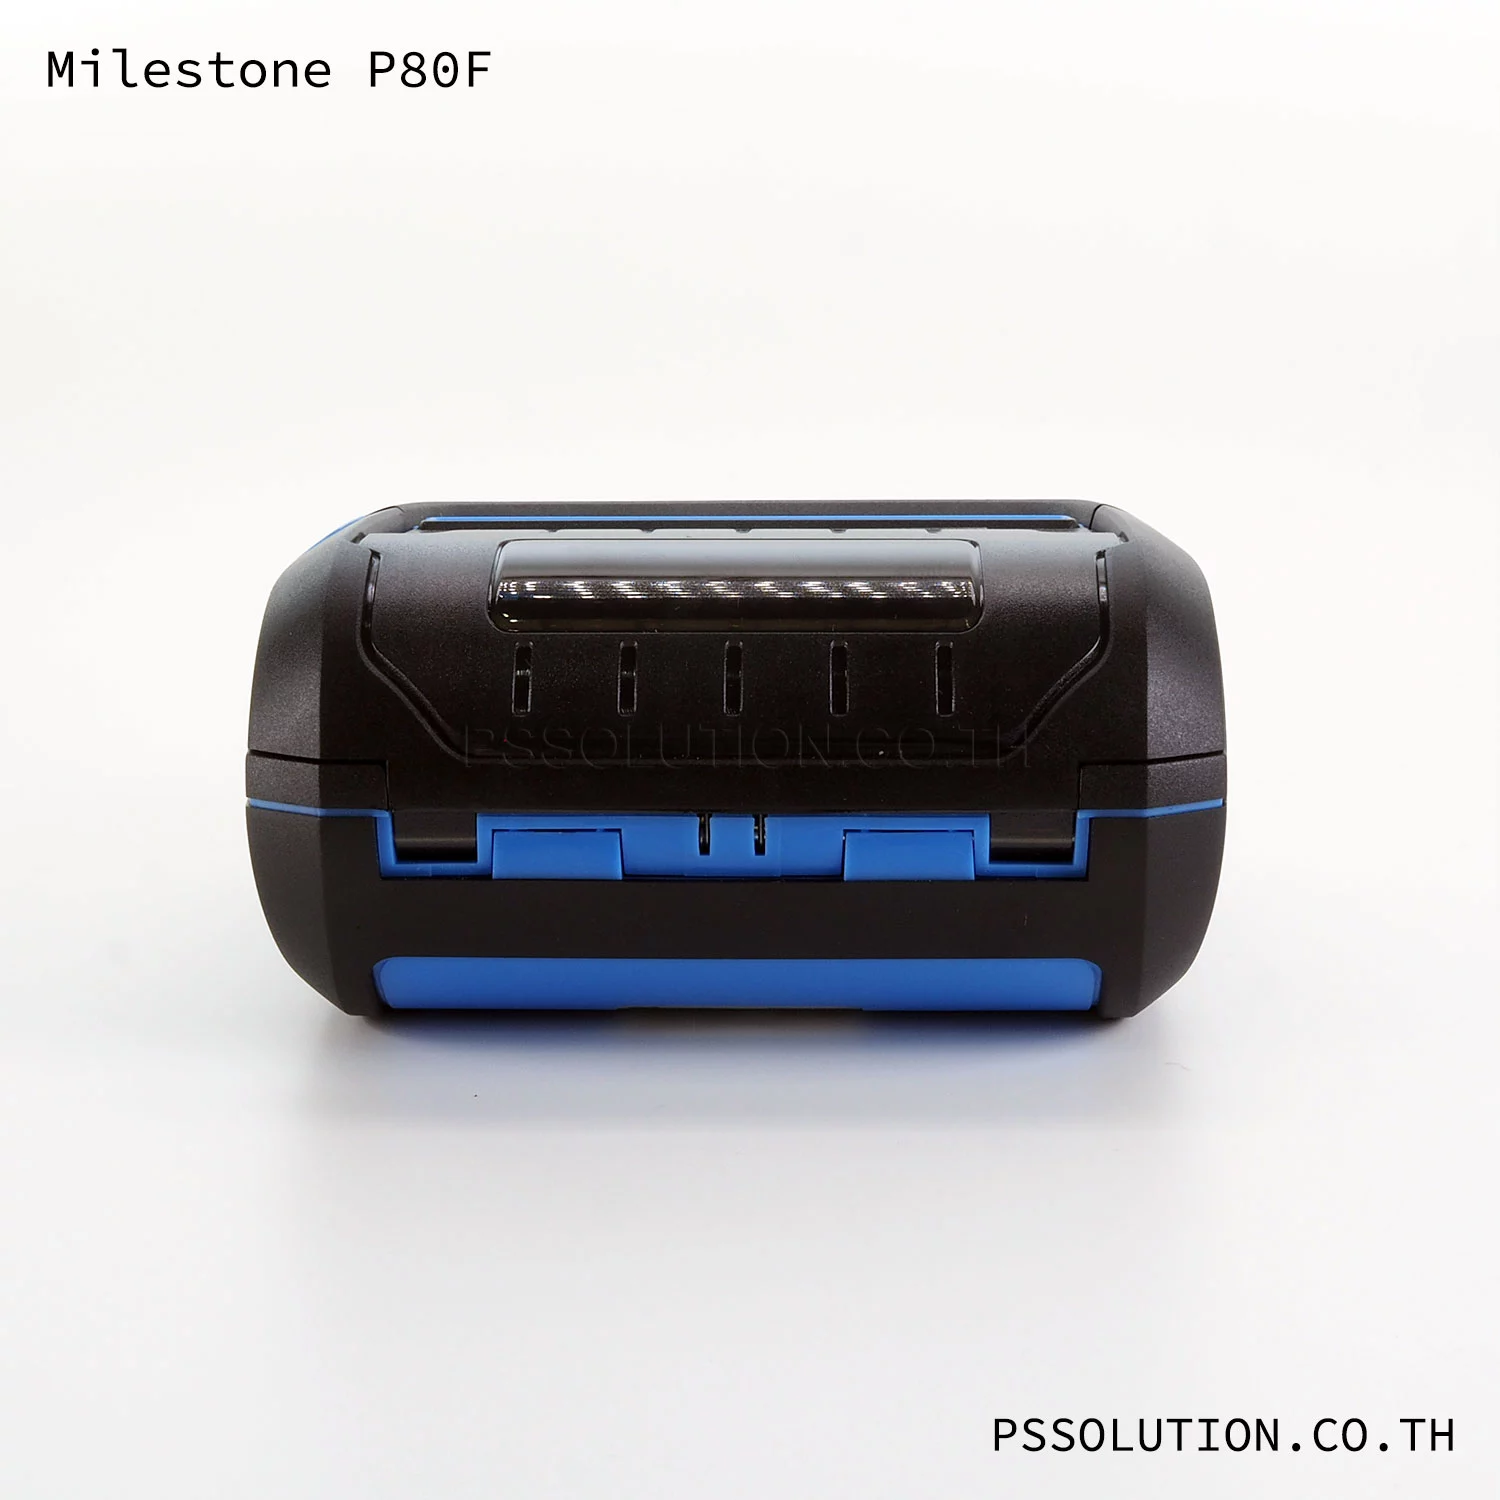 Milestone P80F เครื่องปริ้นใบเสร็จพกพา เครื่องพิมพ์สติกเกอร์พกพา BLUETOOTH พิมพ์จากมือถือ Mobile Printer 80mm-10